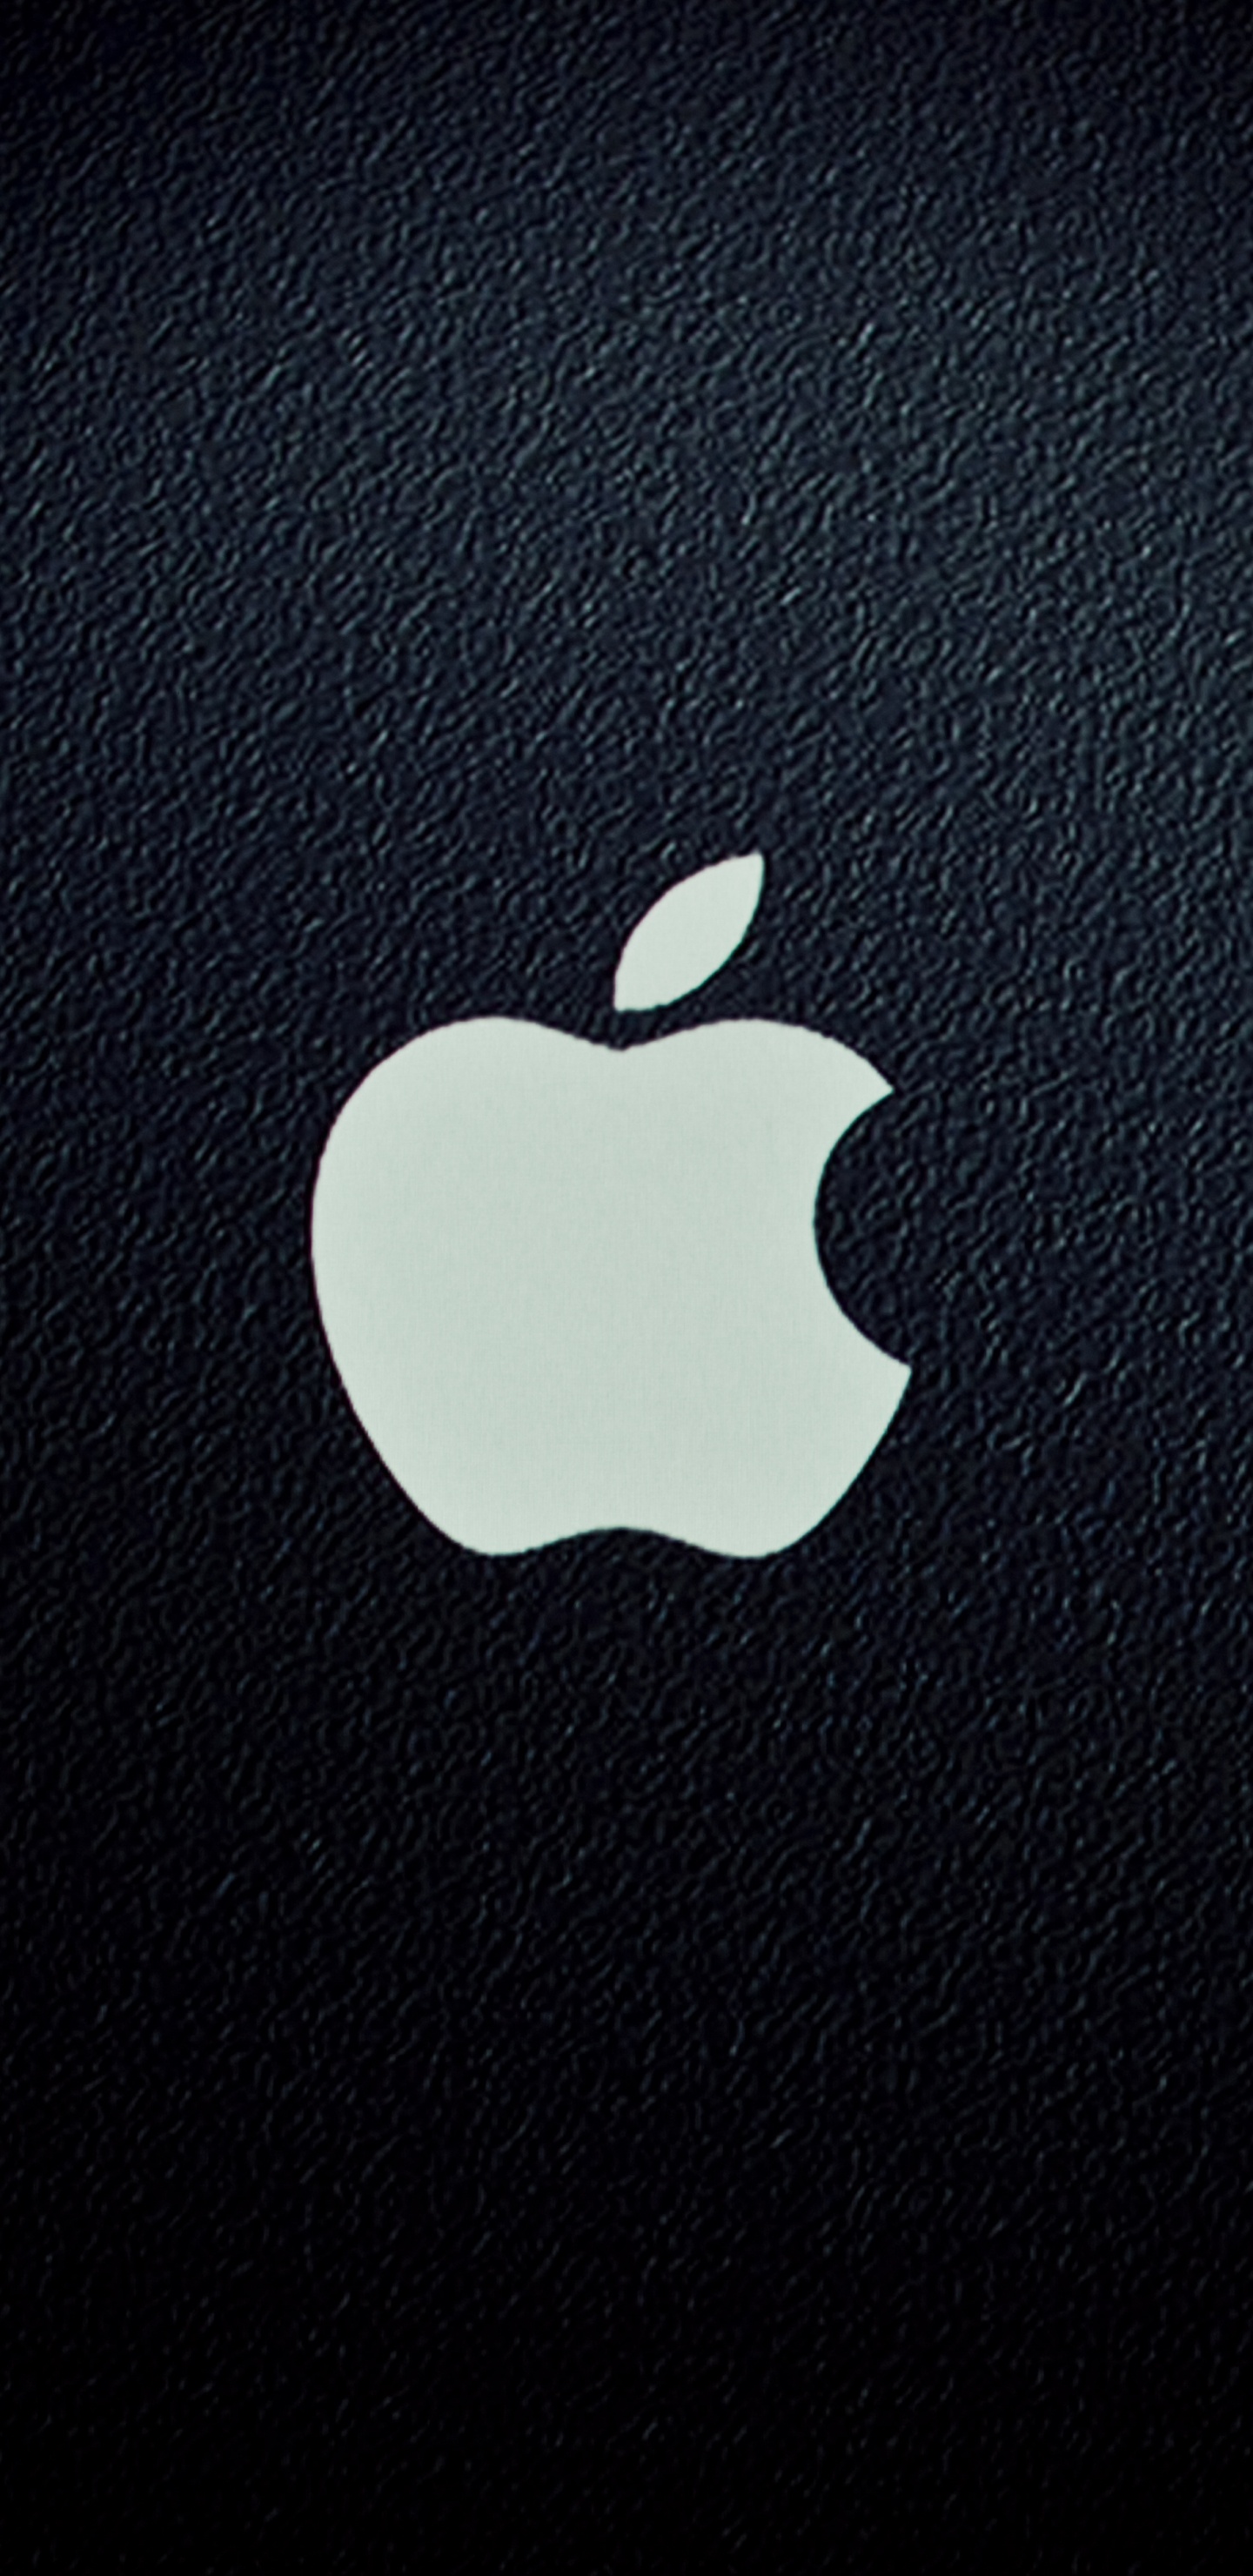 Apple, Logo, Graphics, Black, Smartphone. Wallpaper in 1440x2960 Resolution